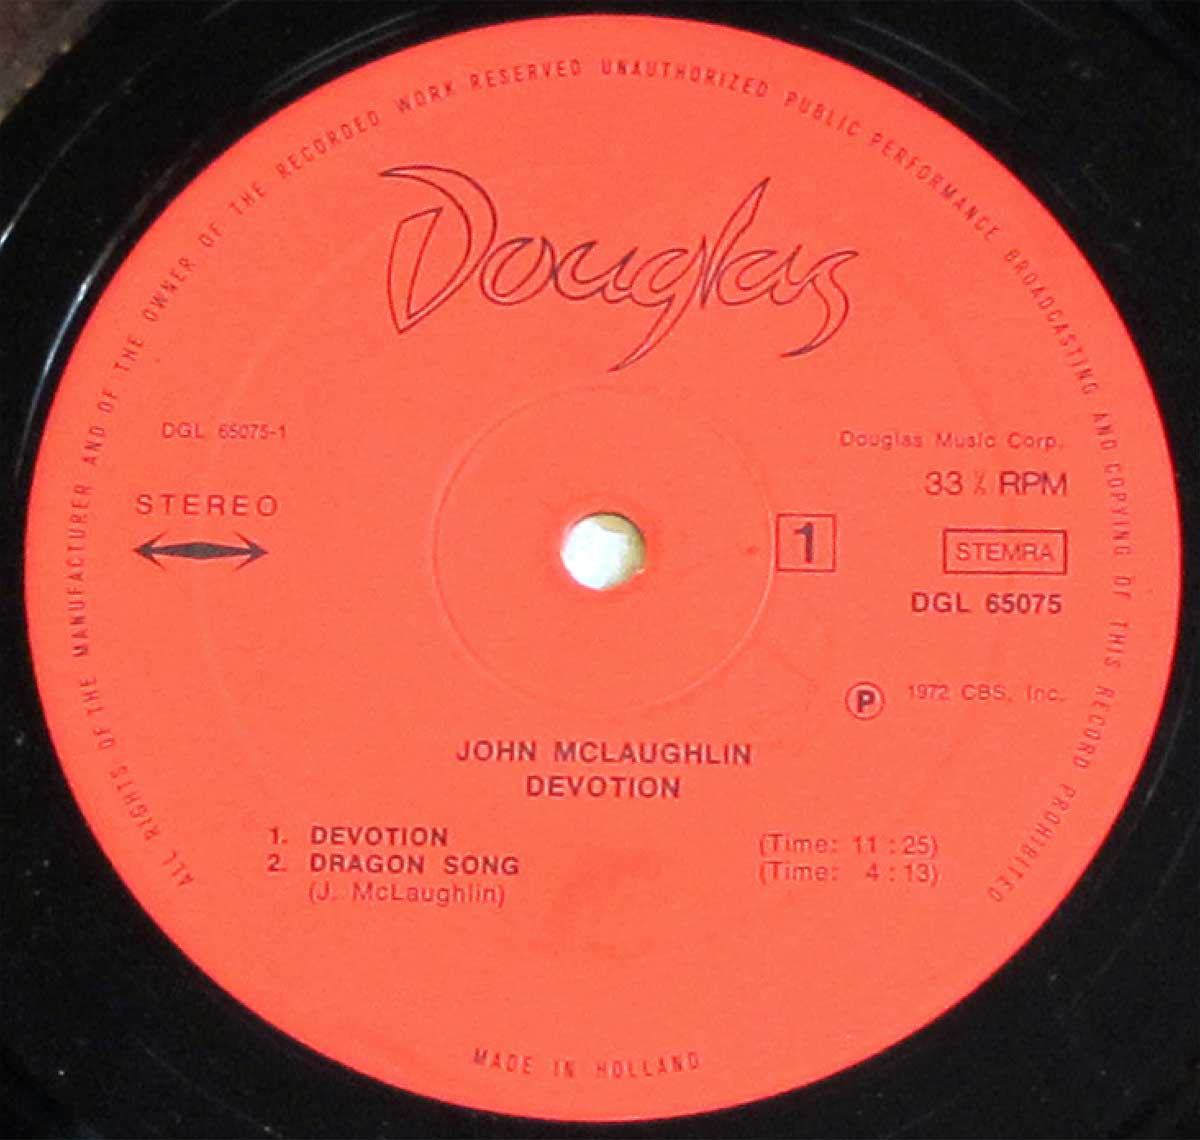 Photo of "JOHN MCLAUGHLIN - Devotion" Record Label 